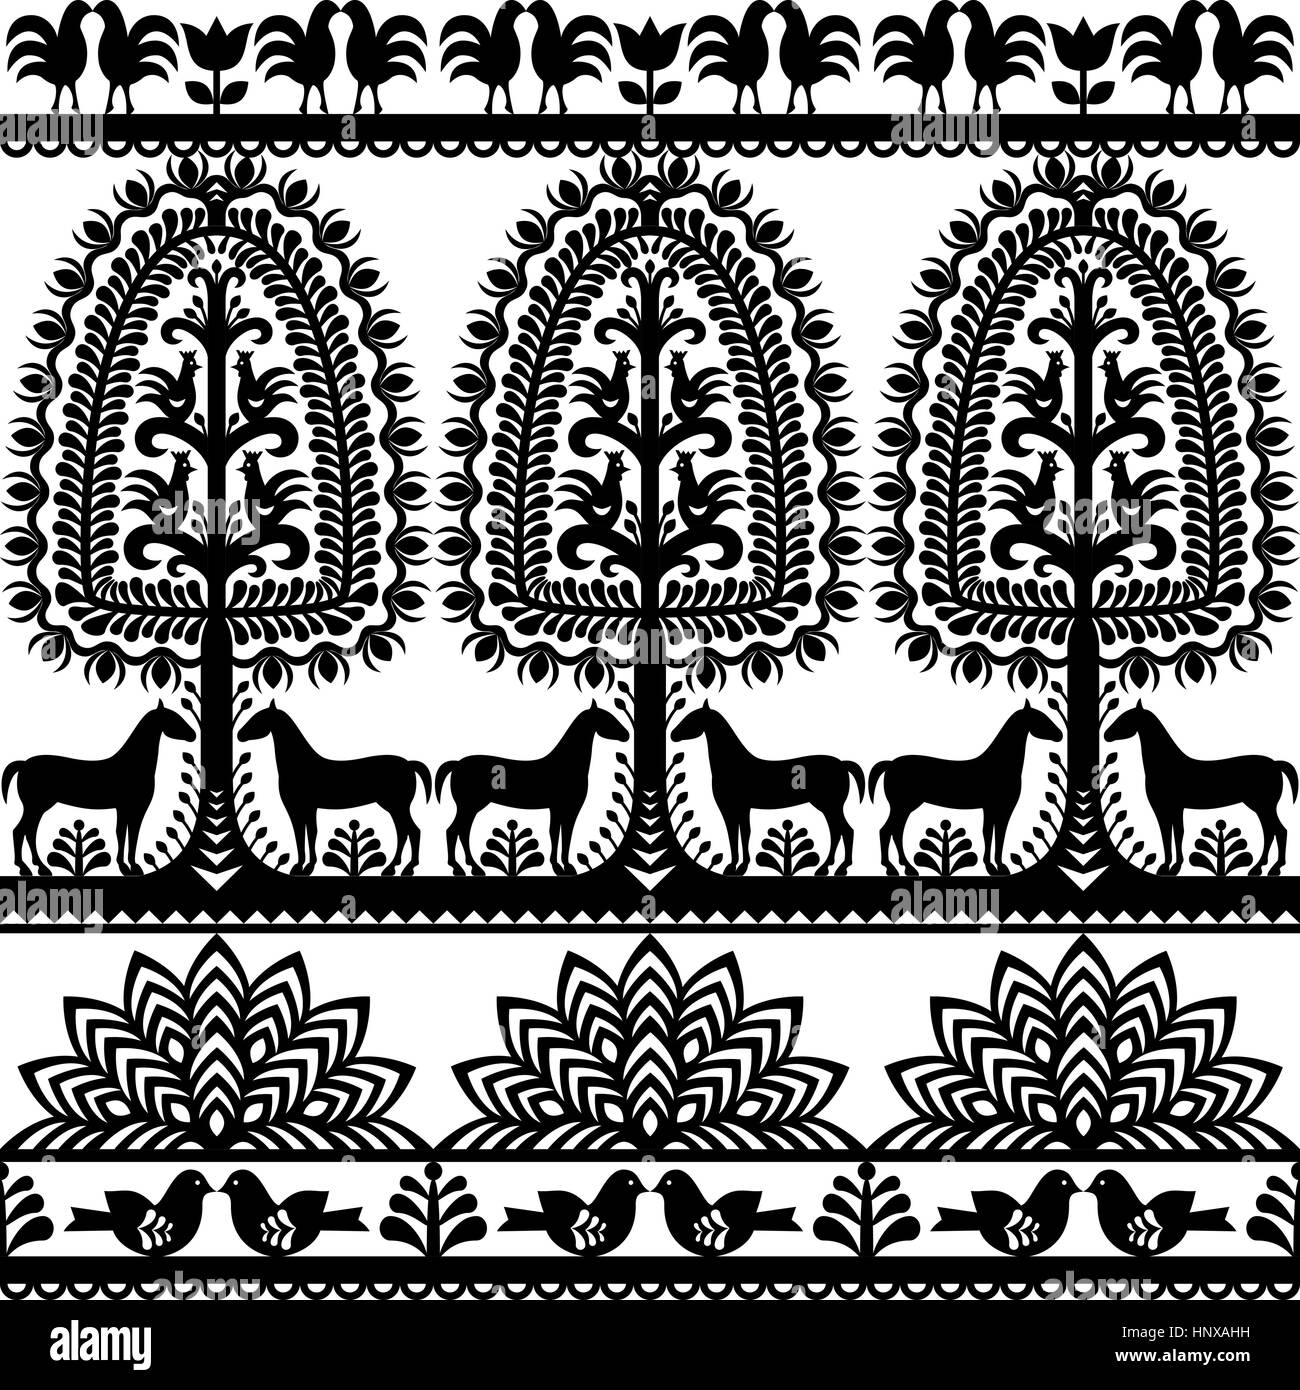 Seamless floral Polish folk art pattern Wycinanki Kurpiowskie - Kurpie Papercuts Stock Vector